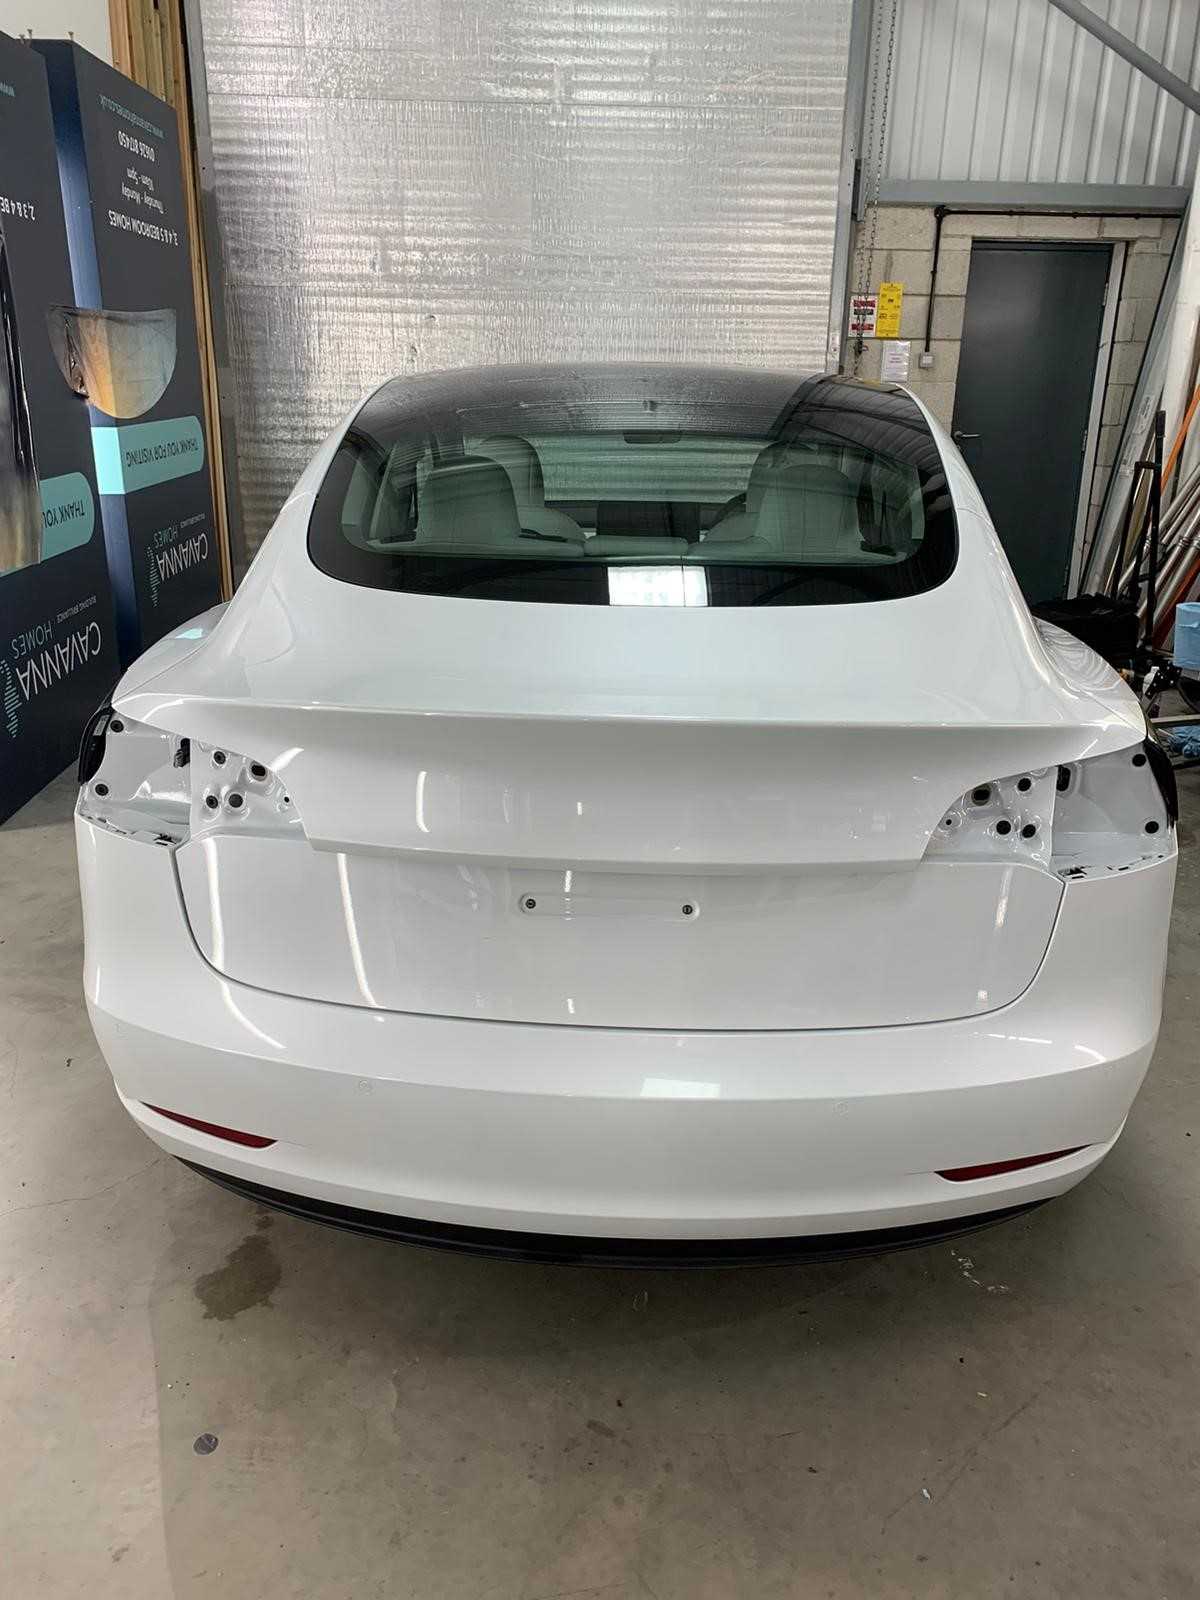 Tesla Model S Wall Hole 3D Decal Vinyl Sticker Decor Room Smashed Luxury Car